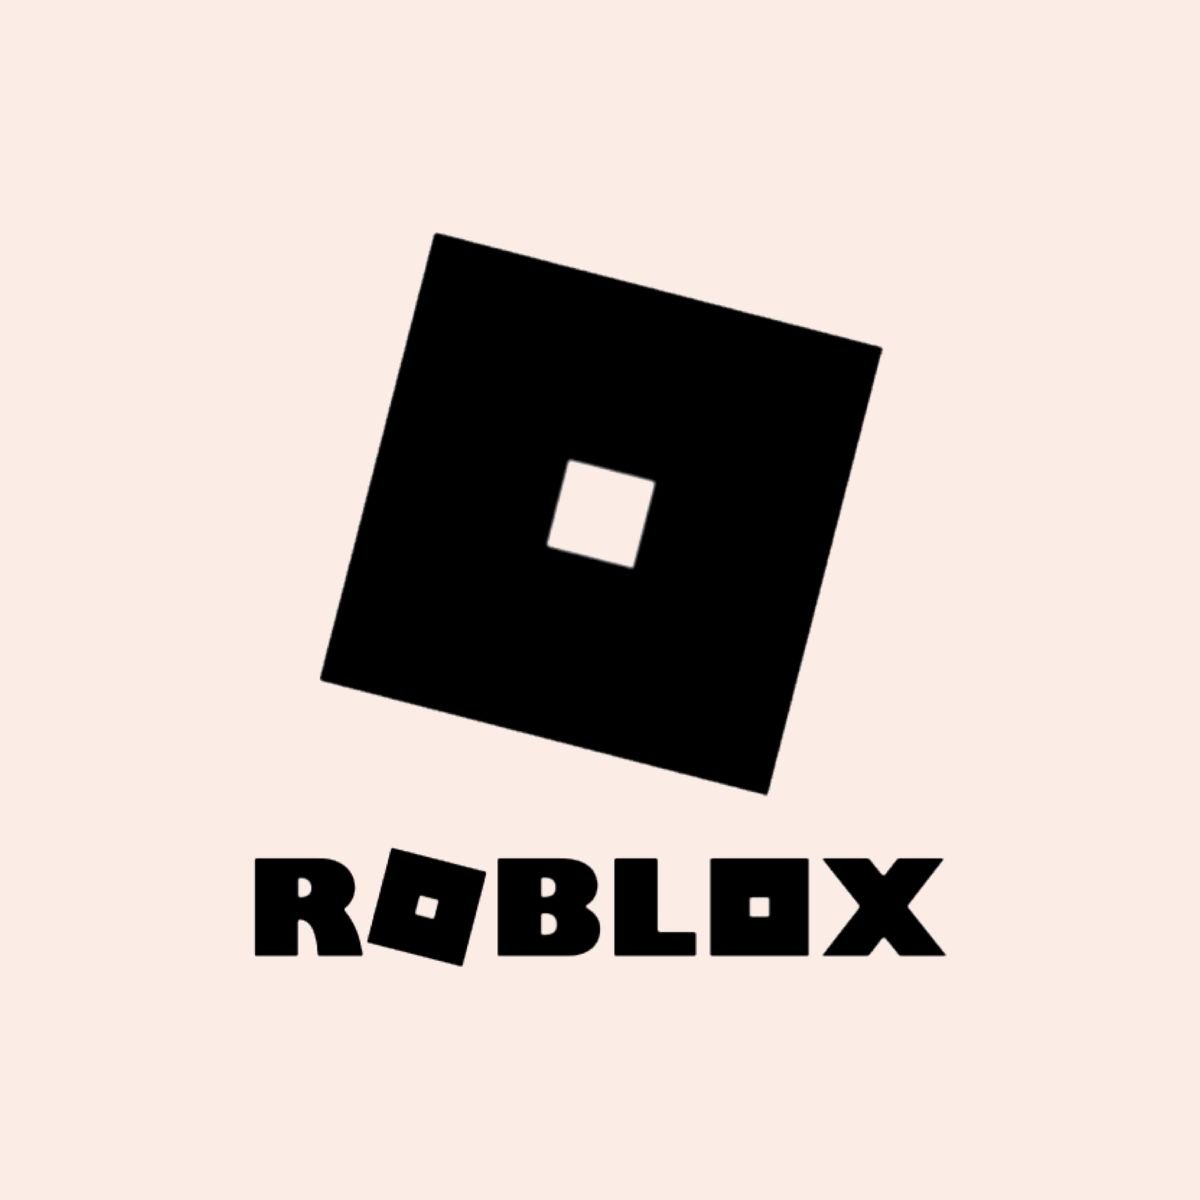 Roblox. iPhone photo app, Wallpaper app, iPhone wallpaper app